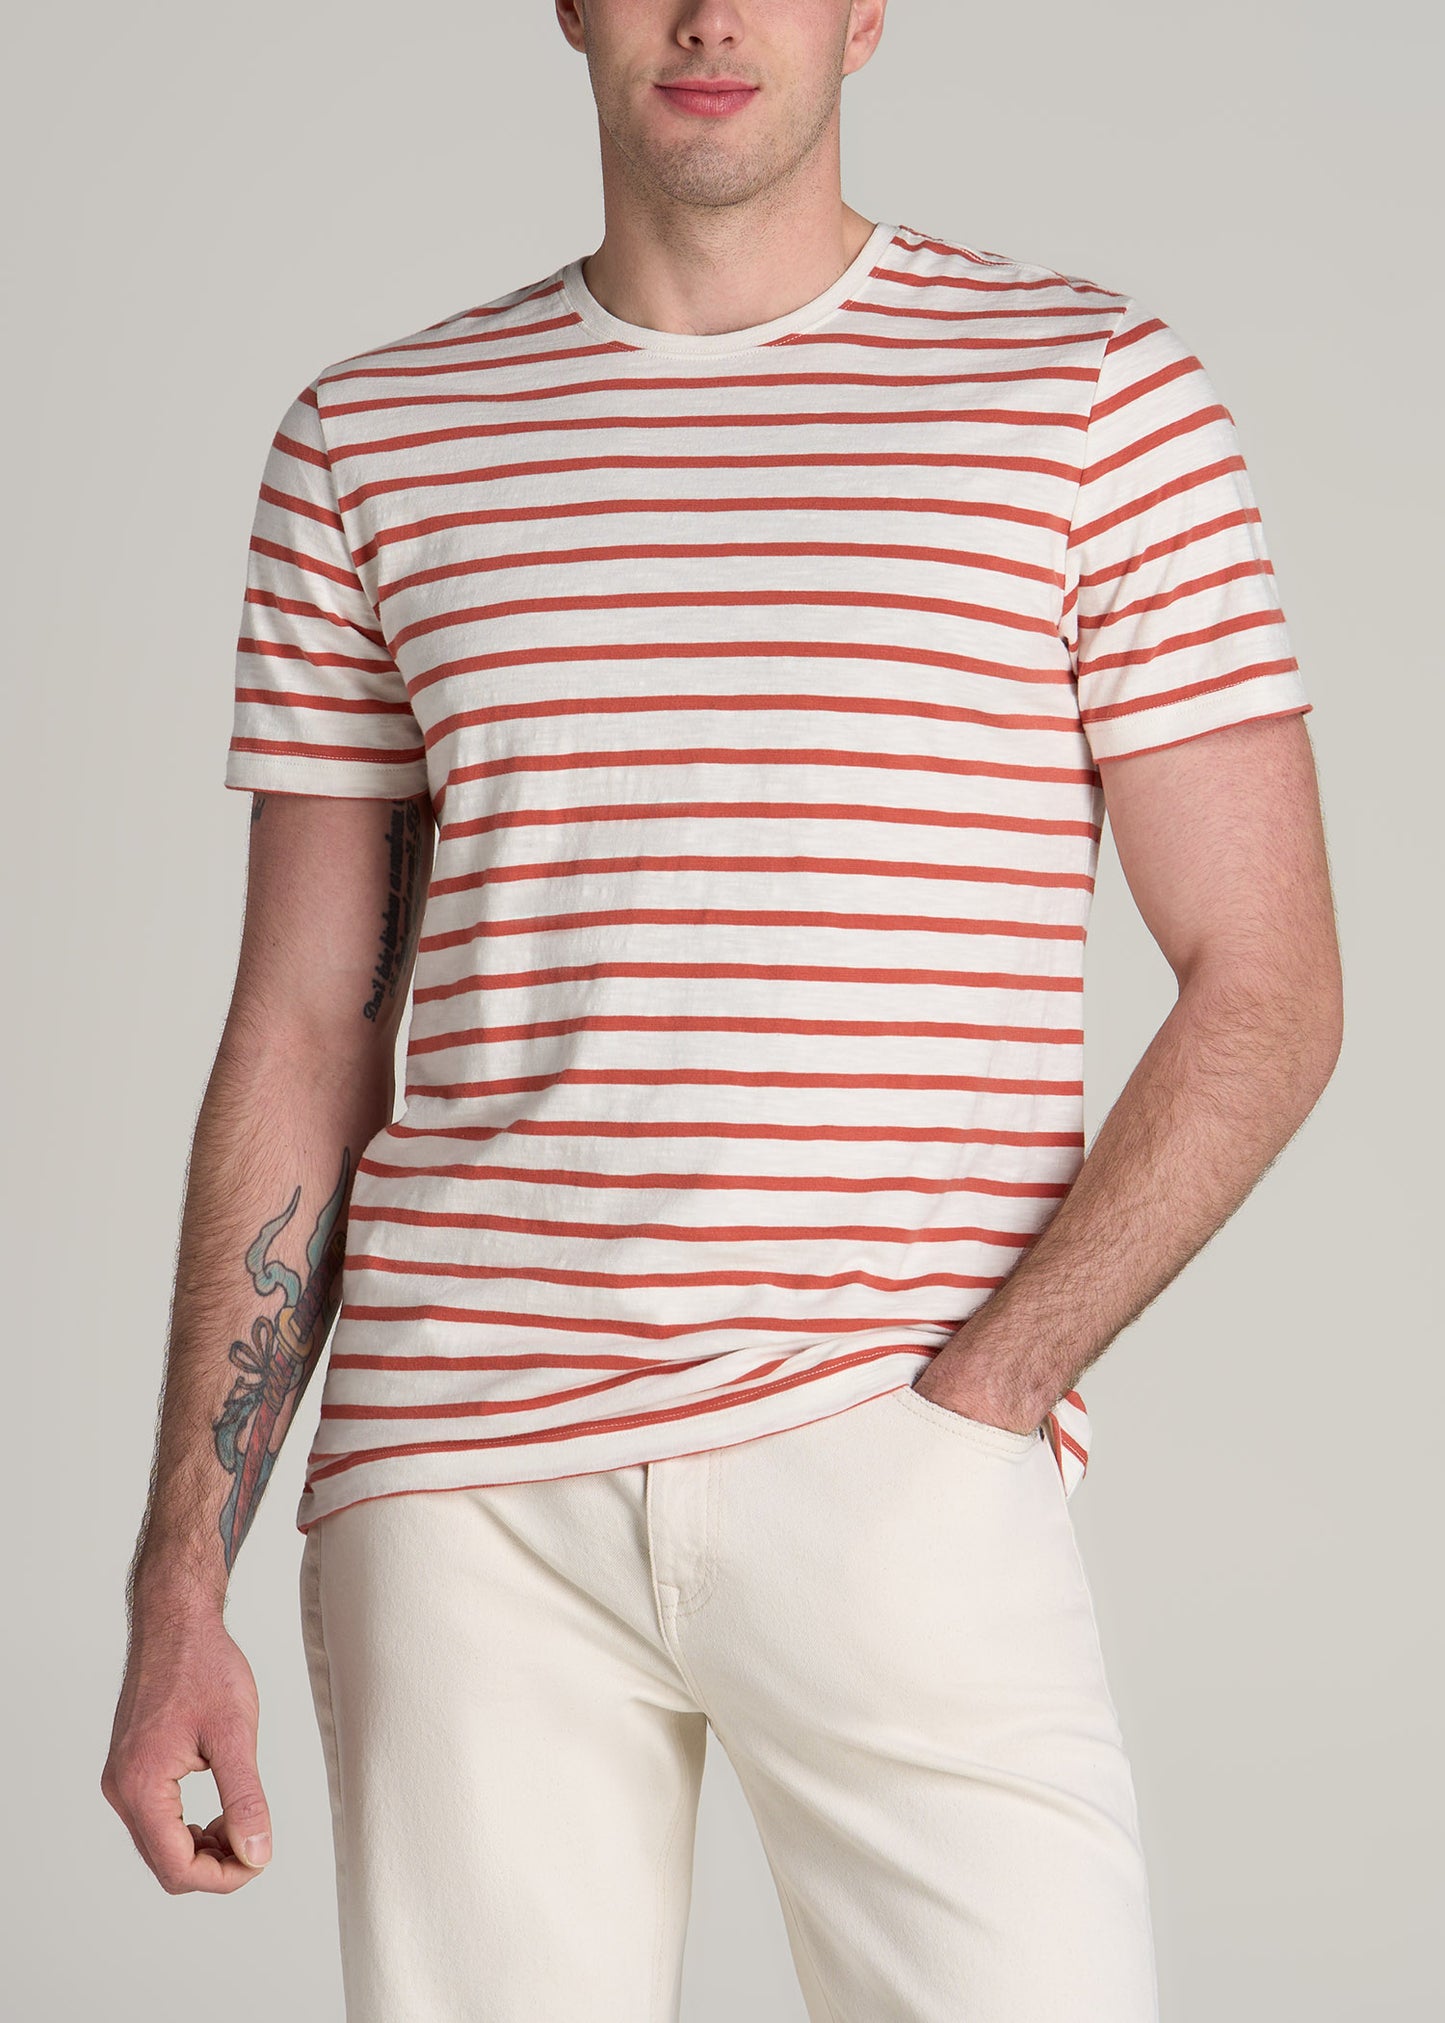 REGULAR-FIT Striped Tee in Burnt Orange and White Stripe - Men's Tall T-shirt